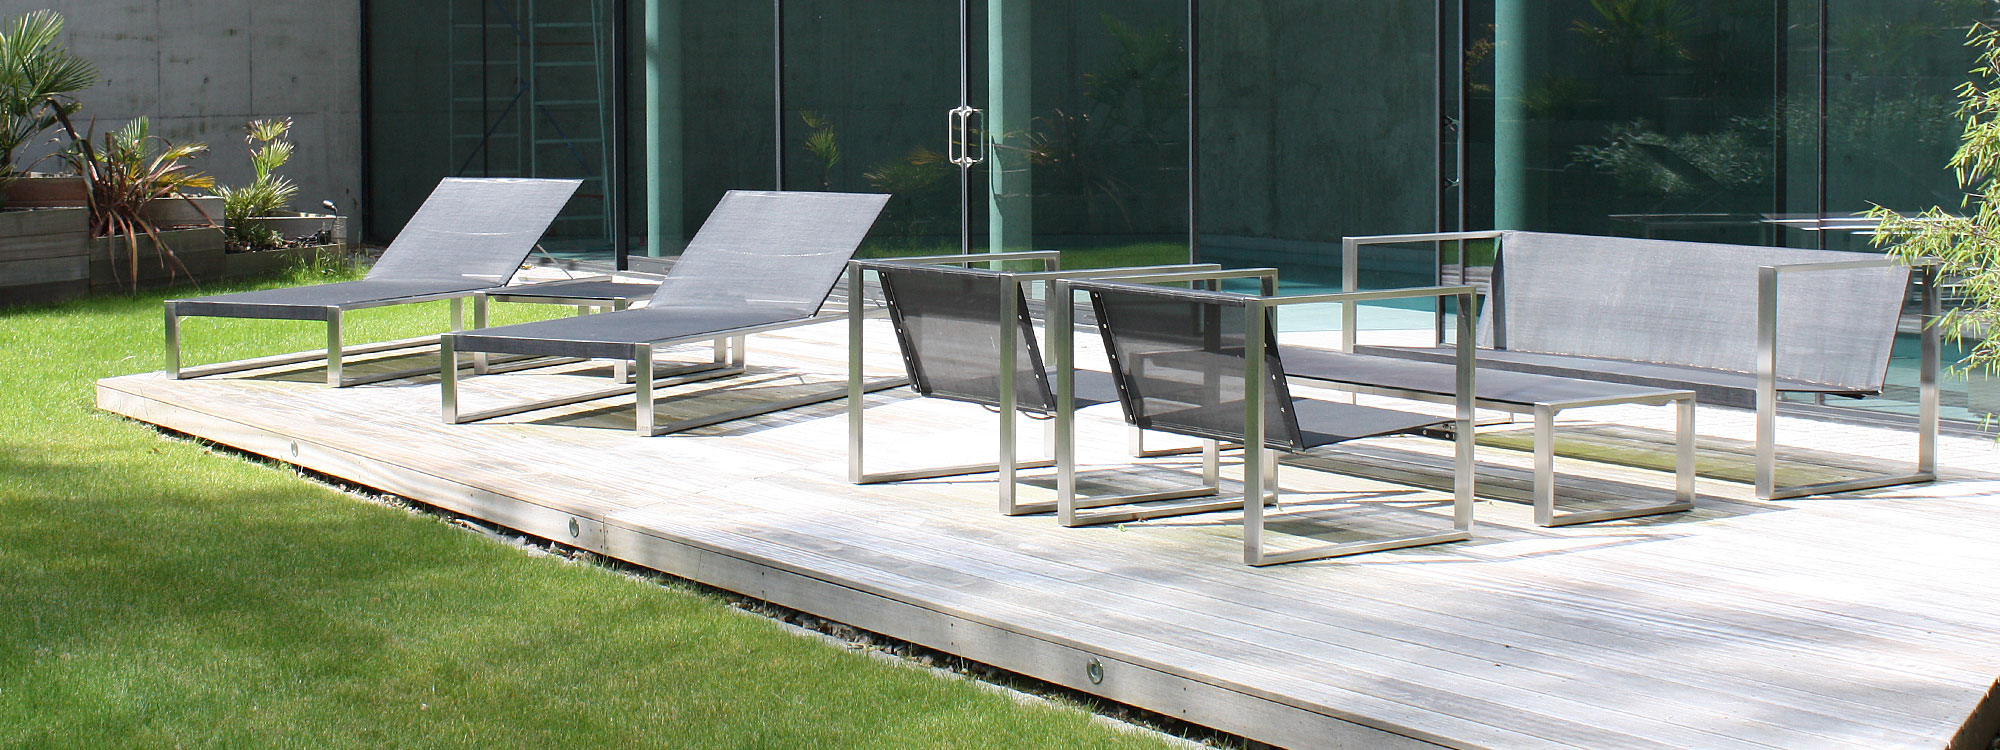 image showing Cima Lounge modernist garden sofas & architectural exterior lounge furniture by FueraDentro modern garden furniture company - Netherlands.